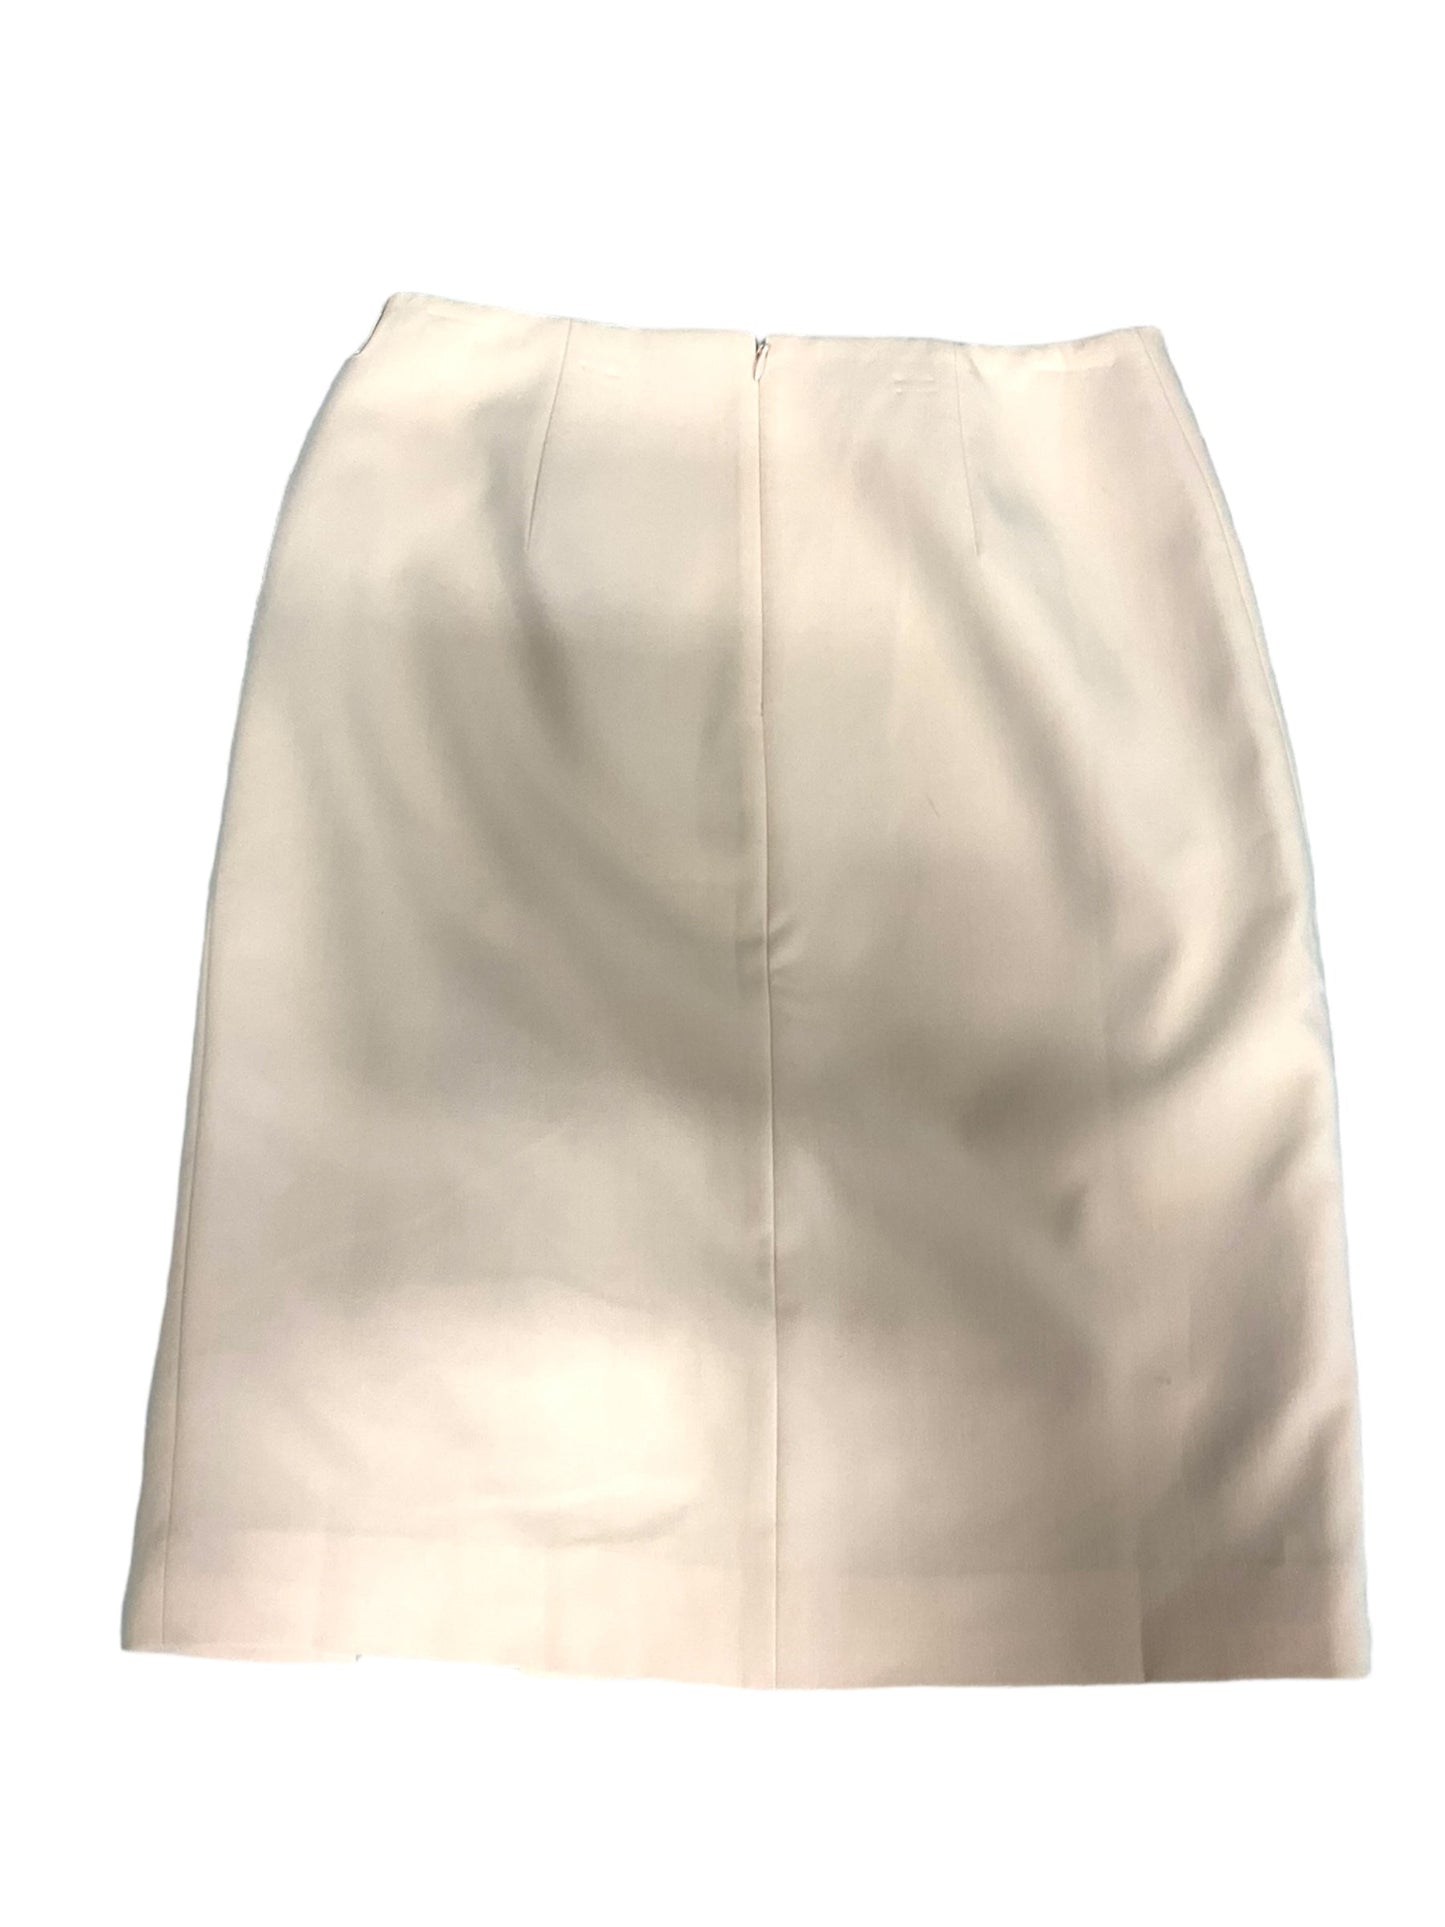 Pink Skirt Midi White House Black Market, Size 6